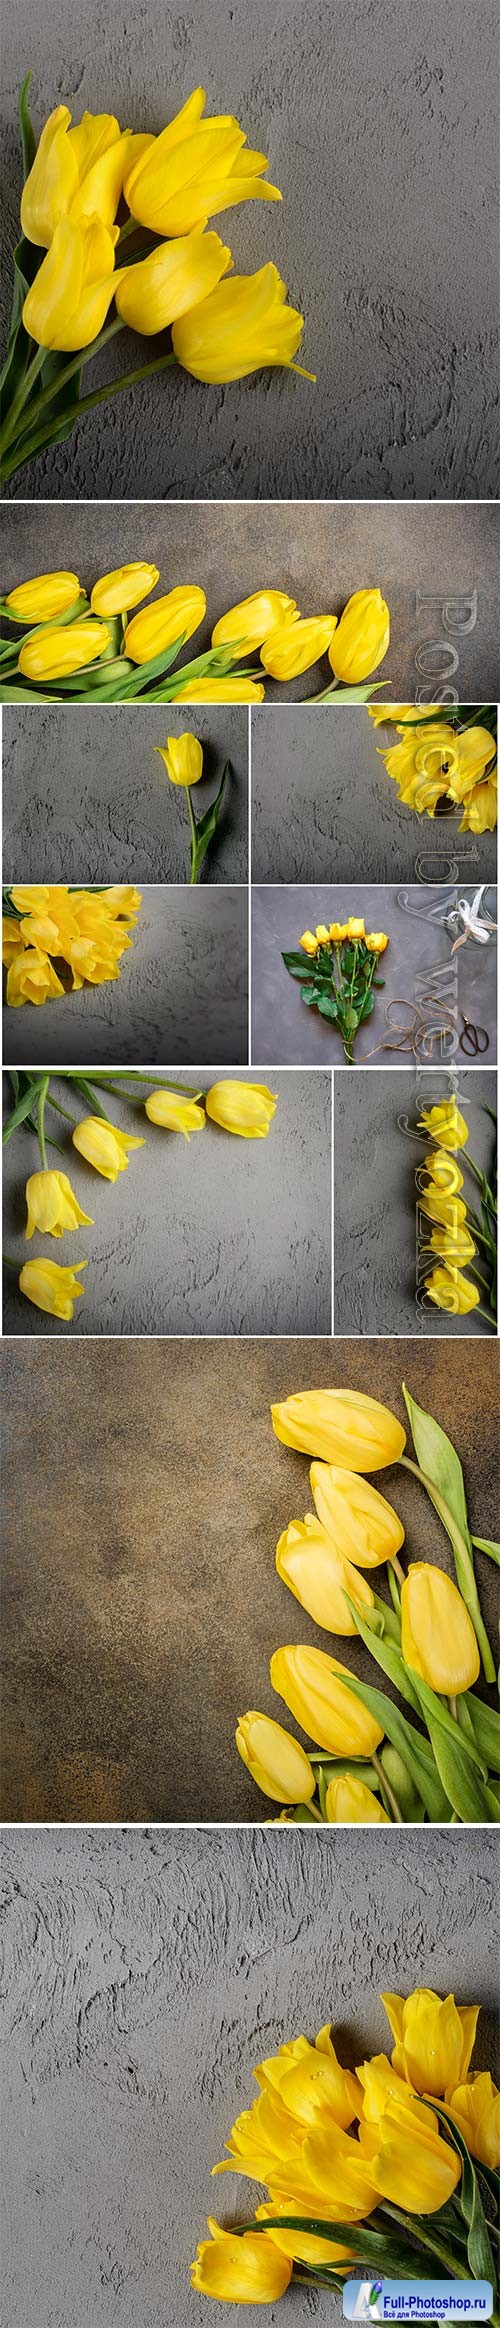 Beautiful yellow tulips stock photo